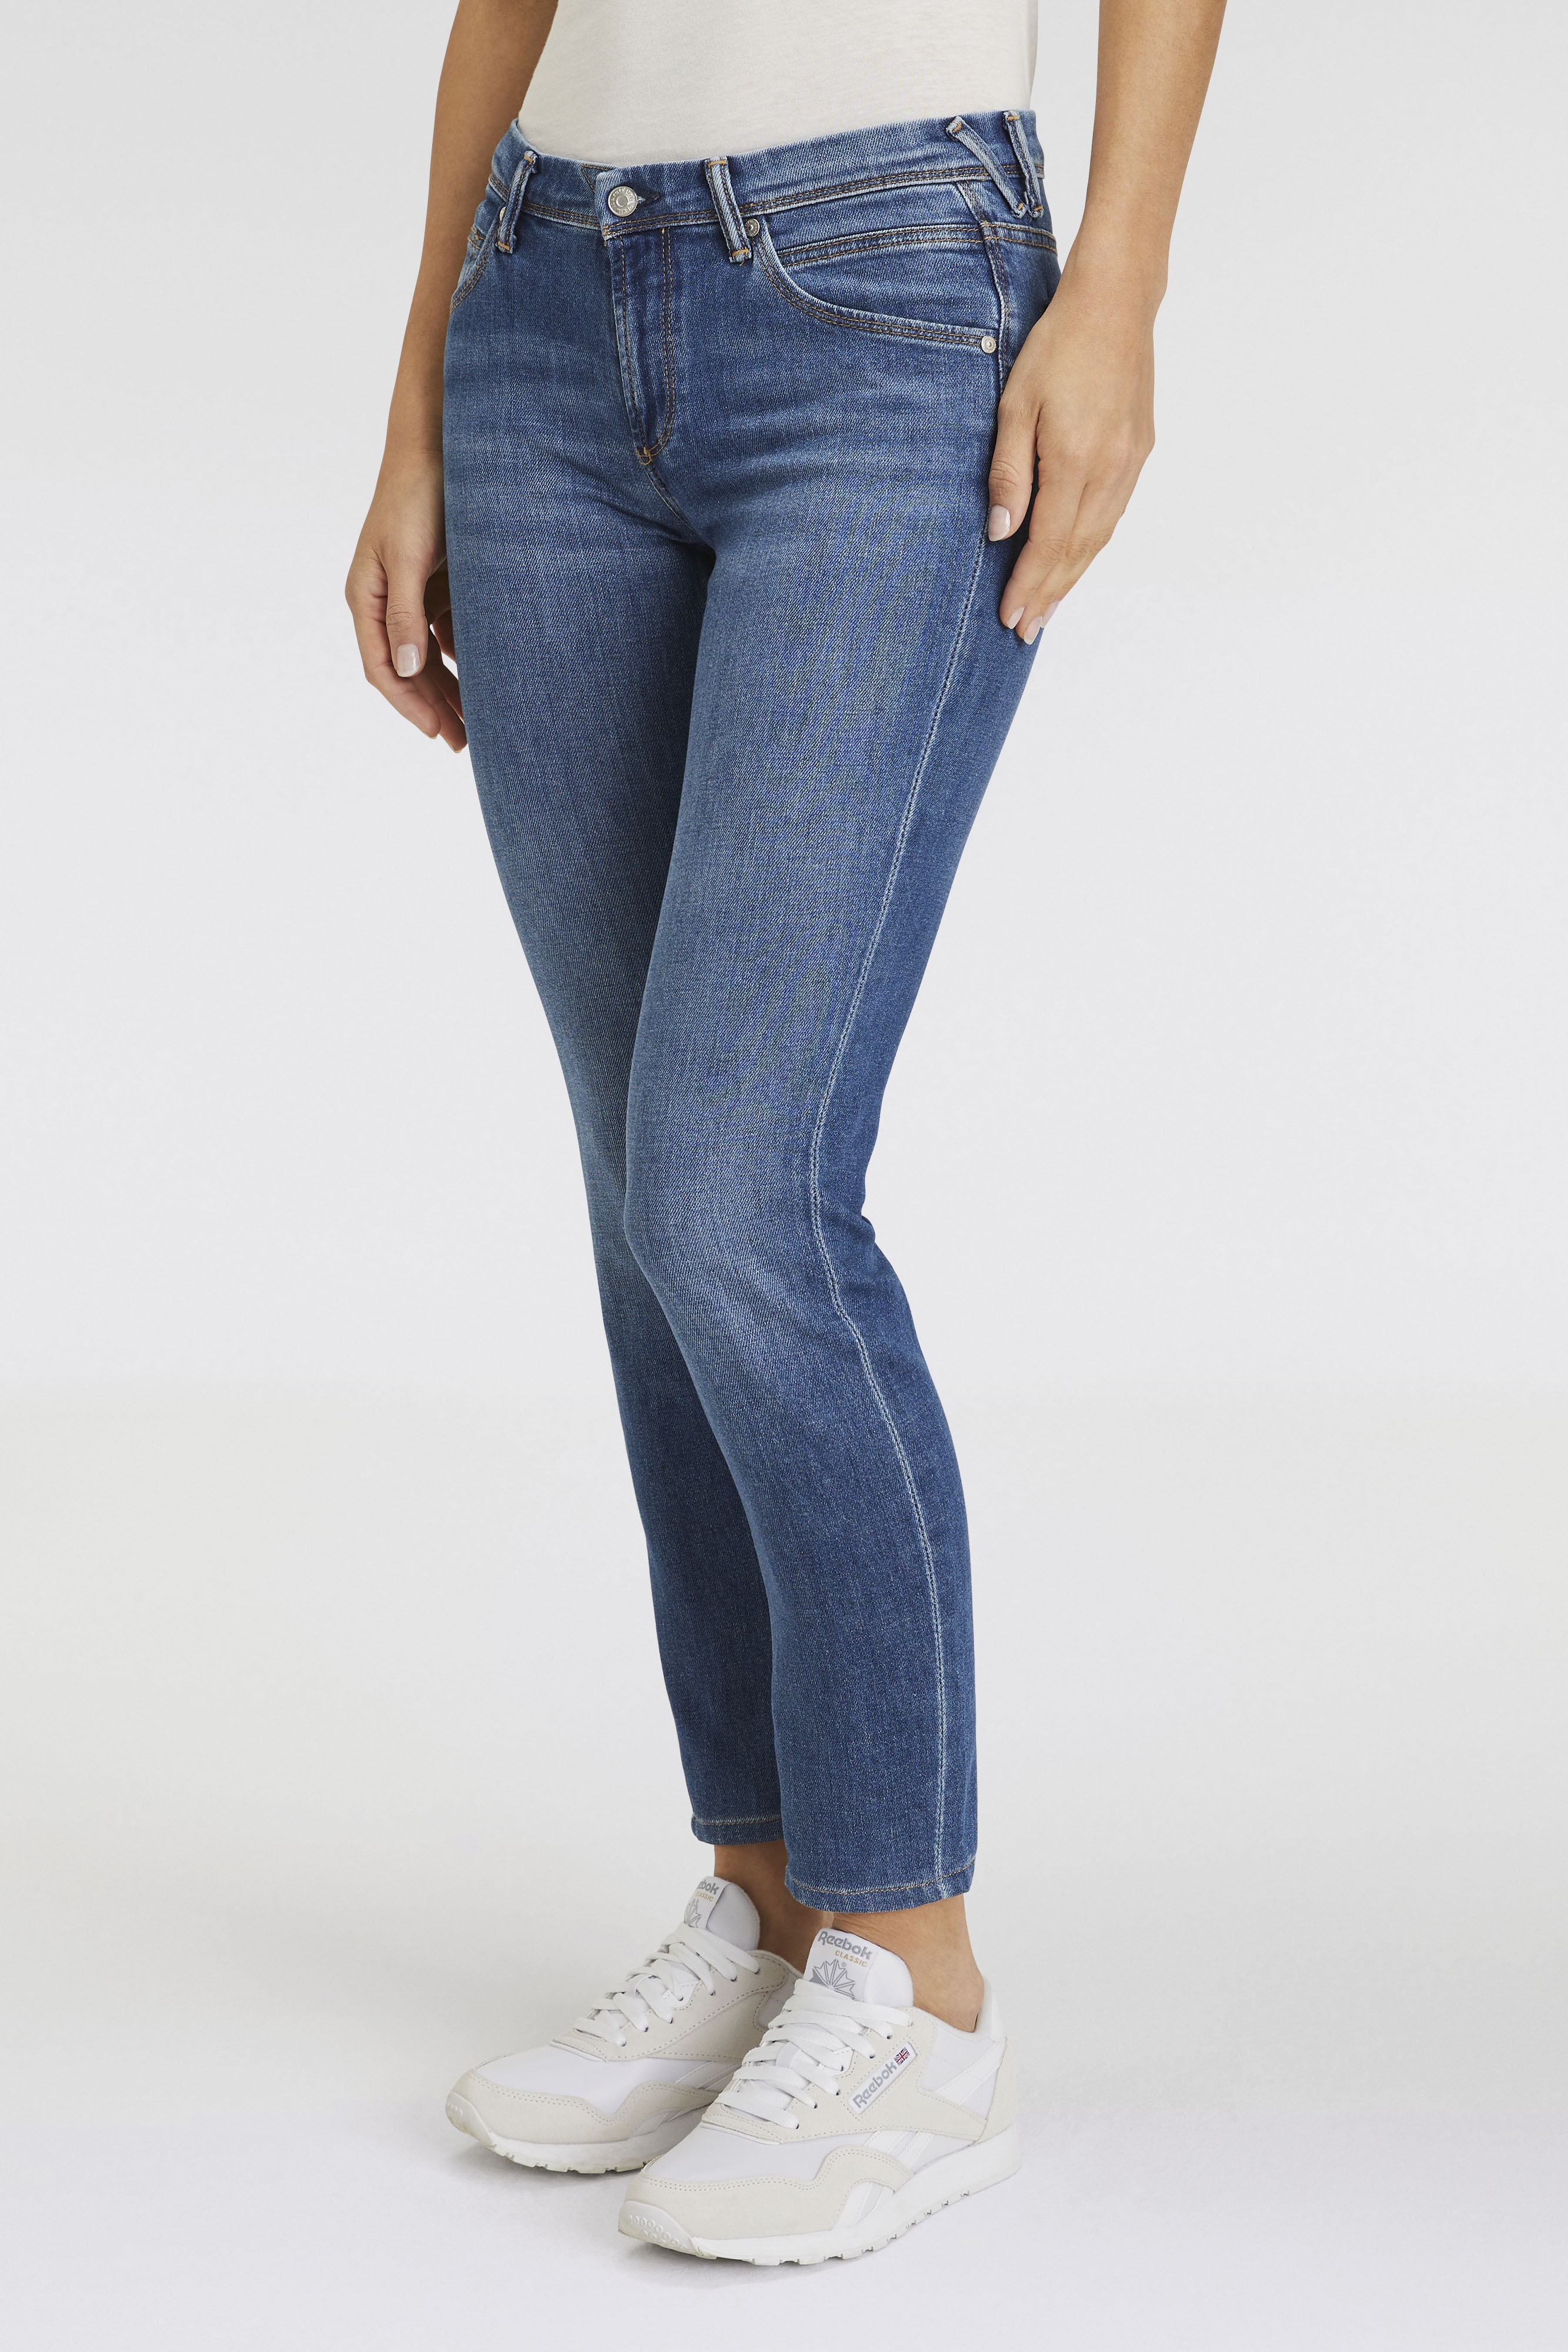 Skinny-fit-Jeans MARC O'POLO DENIM "Alva" Gr. 26, Länge 32, blau (denim blue) Damen Jeans Röhrenjeans